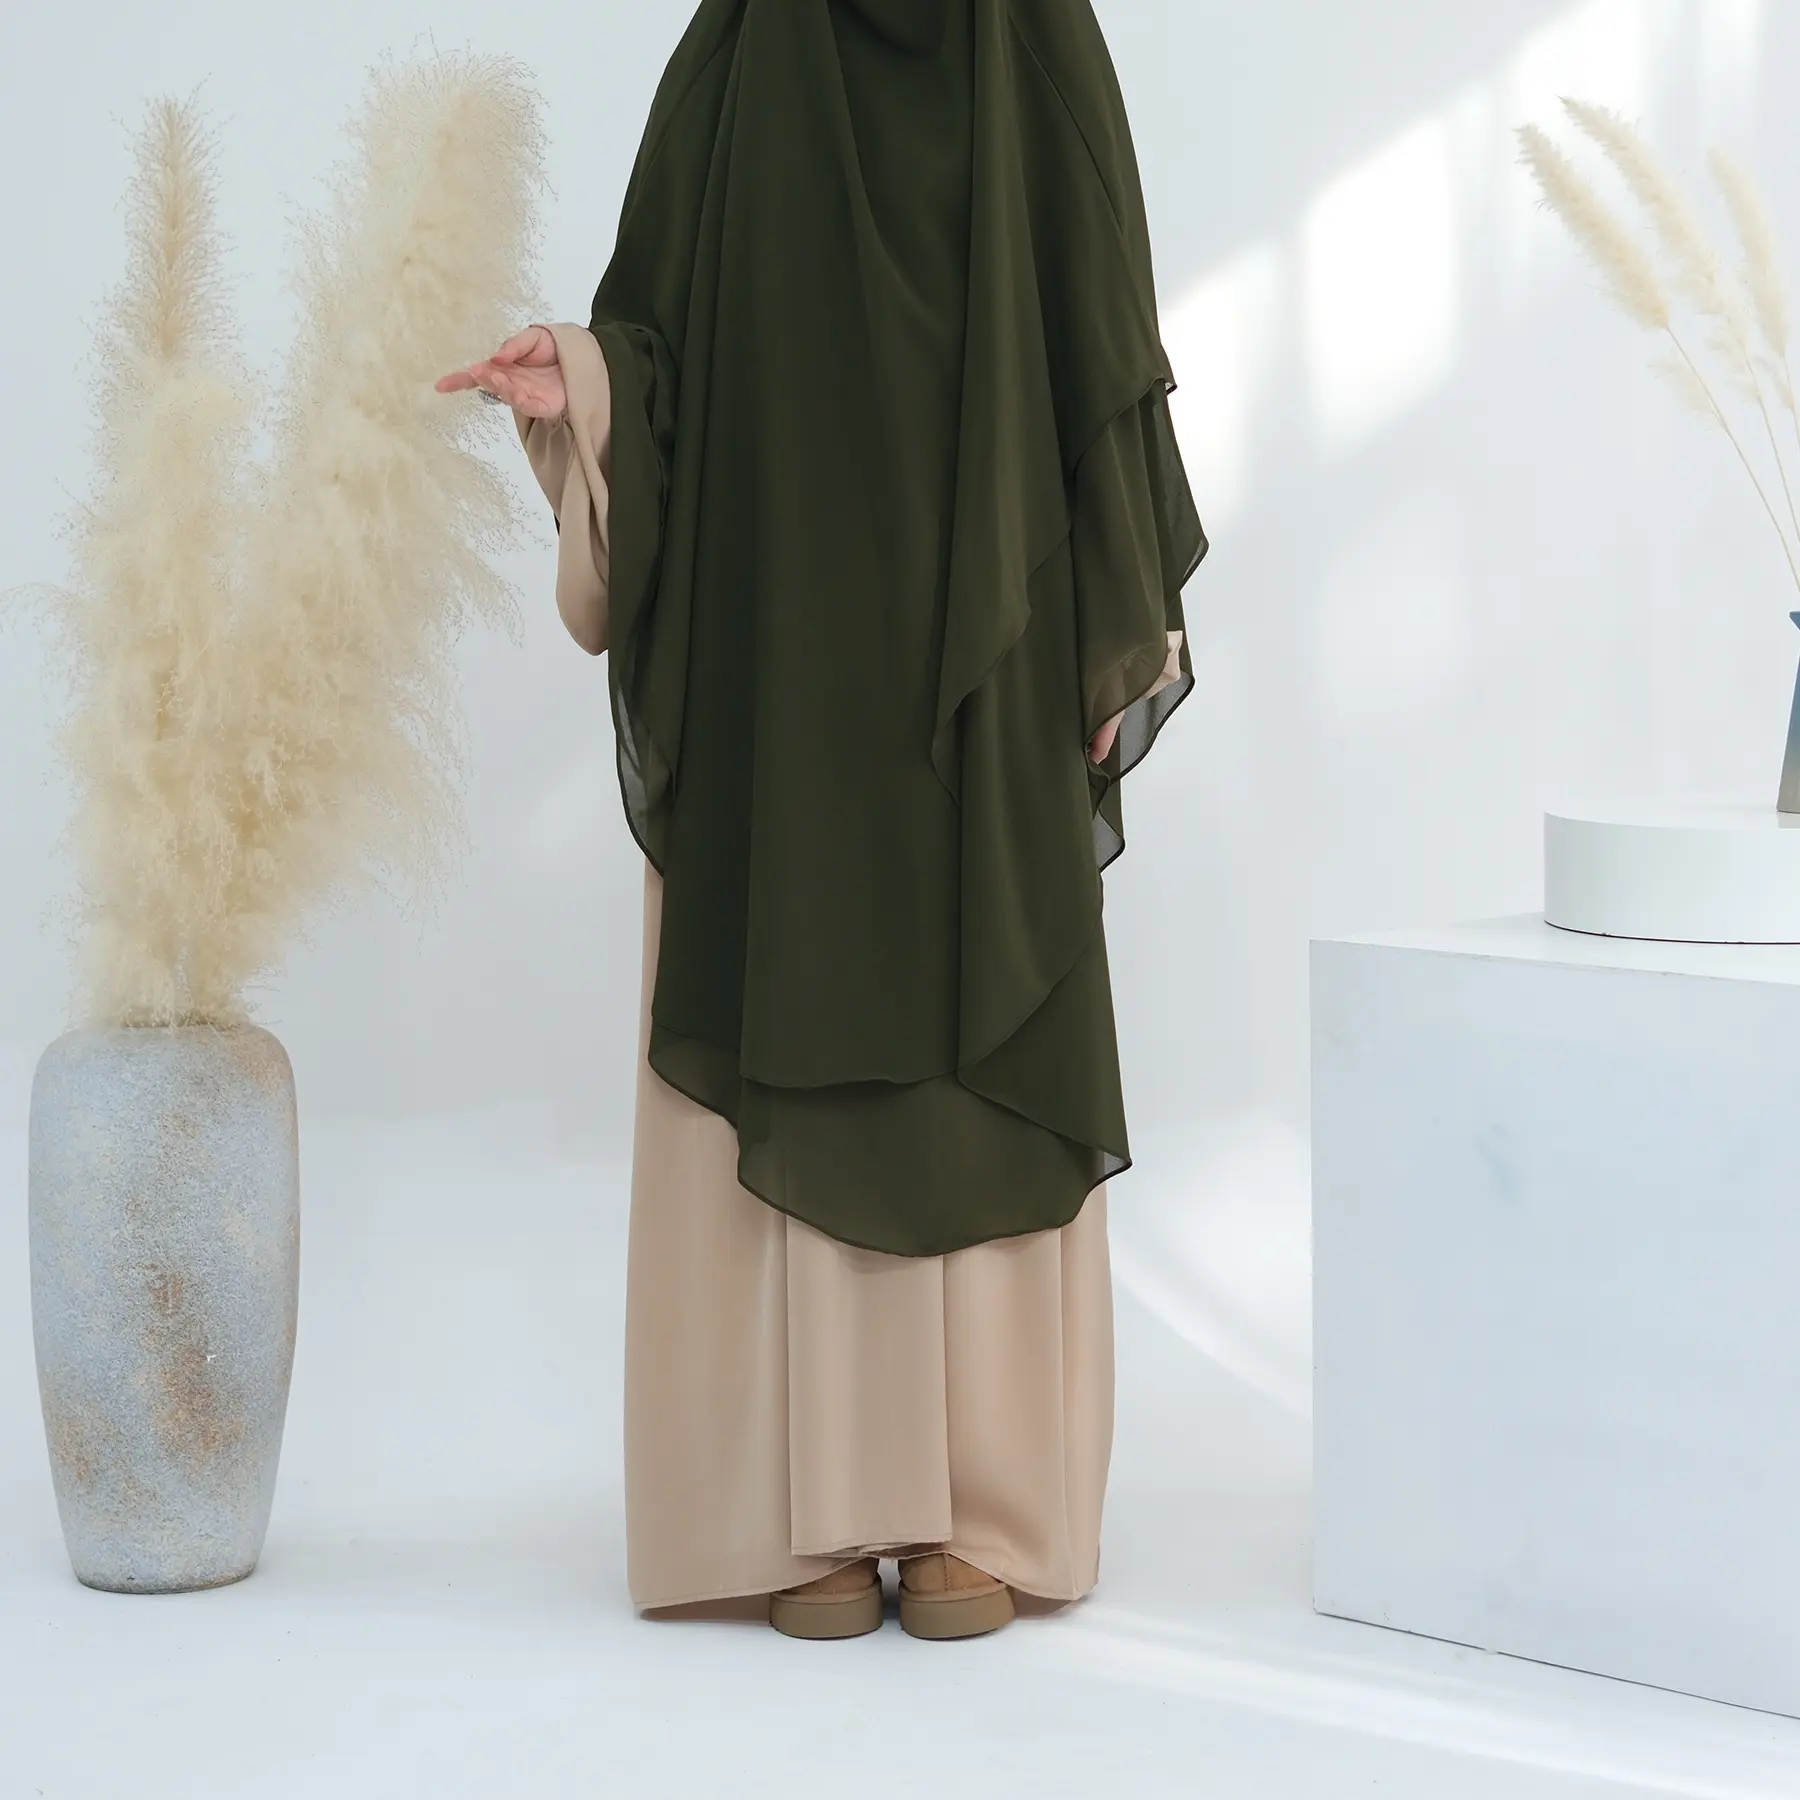 2023 न्यू टर्की ओवरहेड टाई बैक प्लेन प्रार्थना स्कार्फ मुस्लिम महिला हिजाब ड्रेस 2 परत लंबी नकाब शिफॉन खिमार